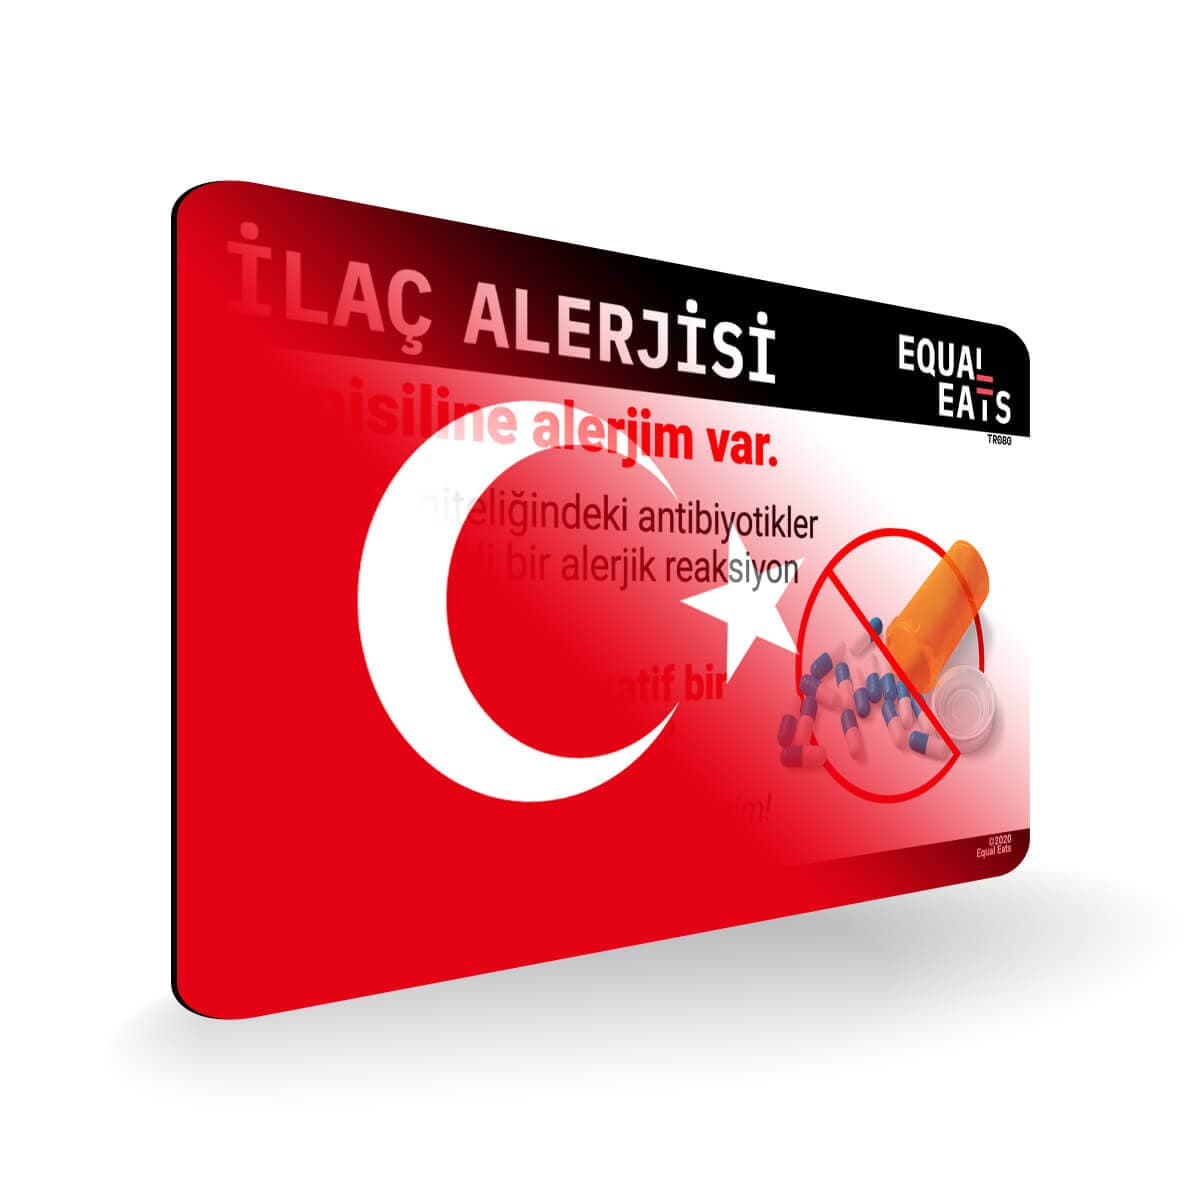 Penicillin Allergy in Turkish. Penicillin medical ID Card for Turkey